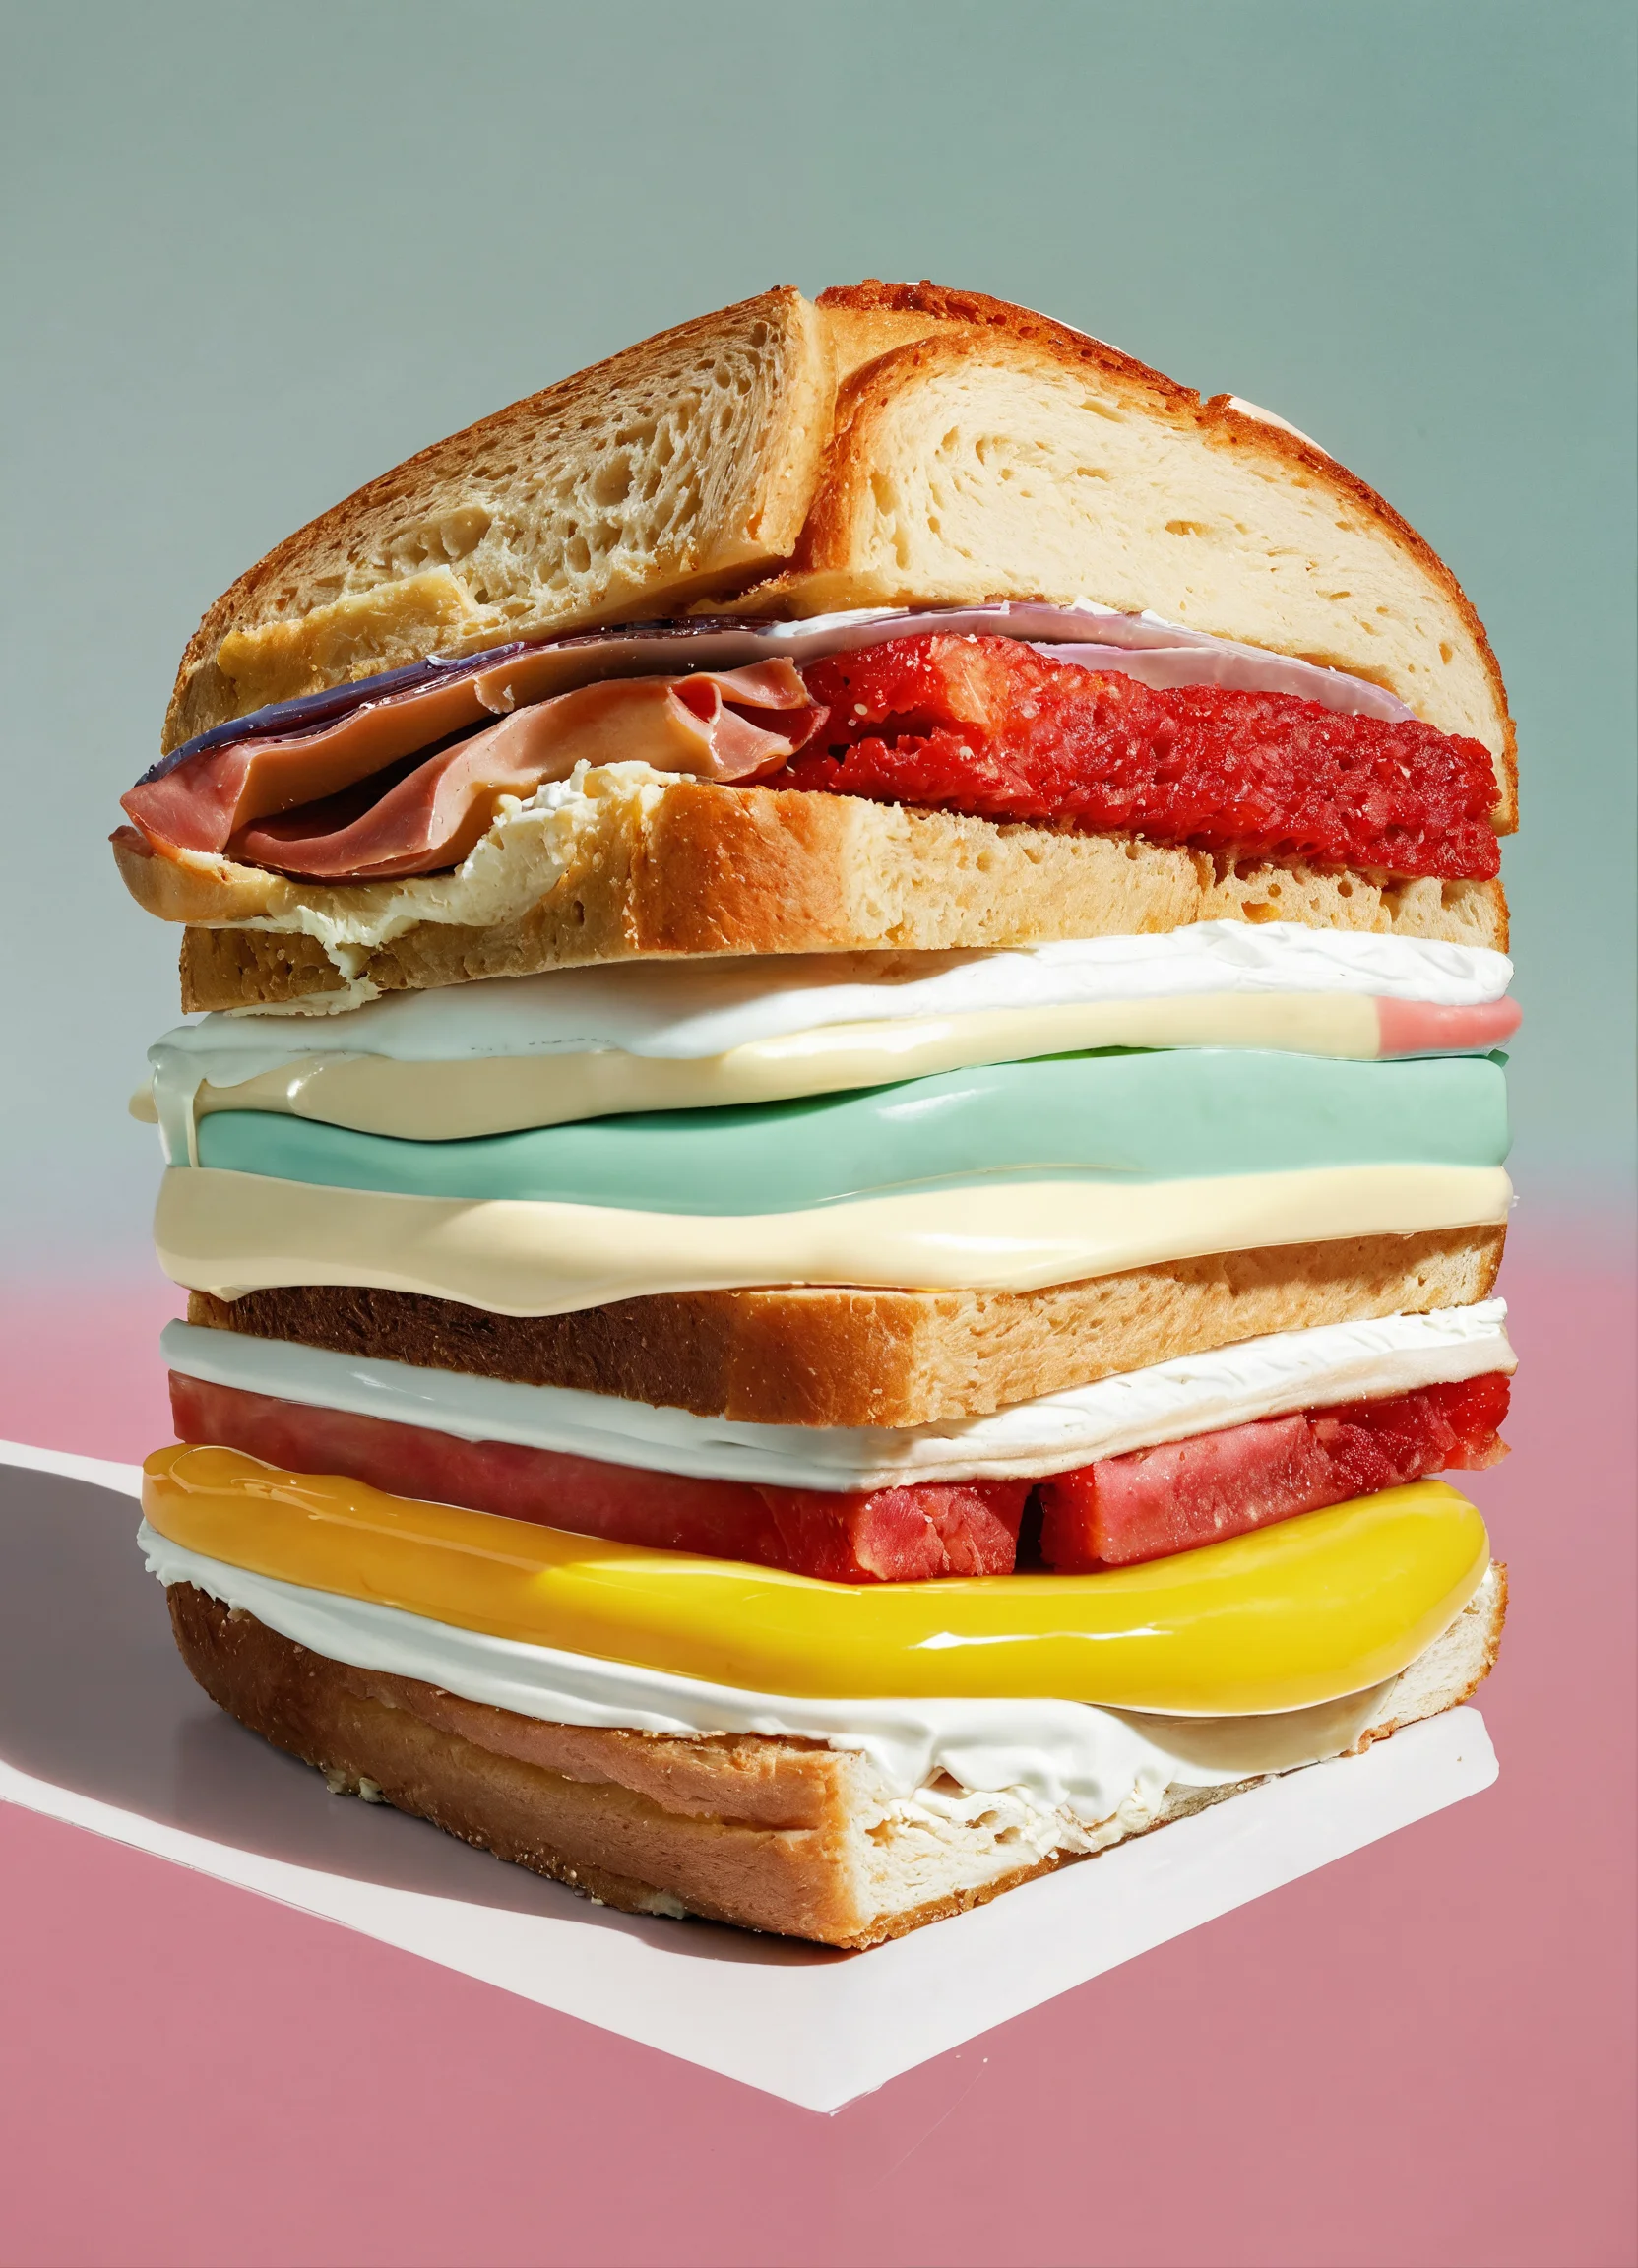 Are You Afraid of Retinol? Use the Sandwich Method or Moisture Sandwiching.